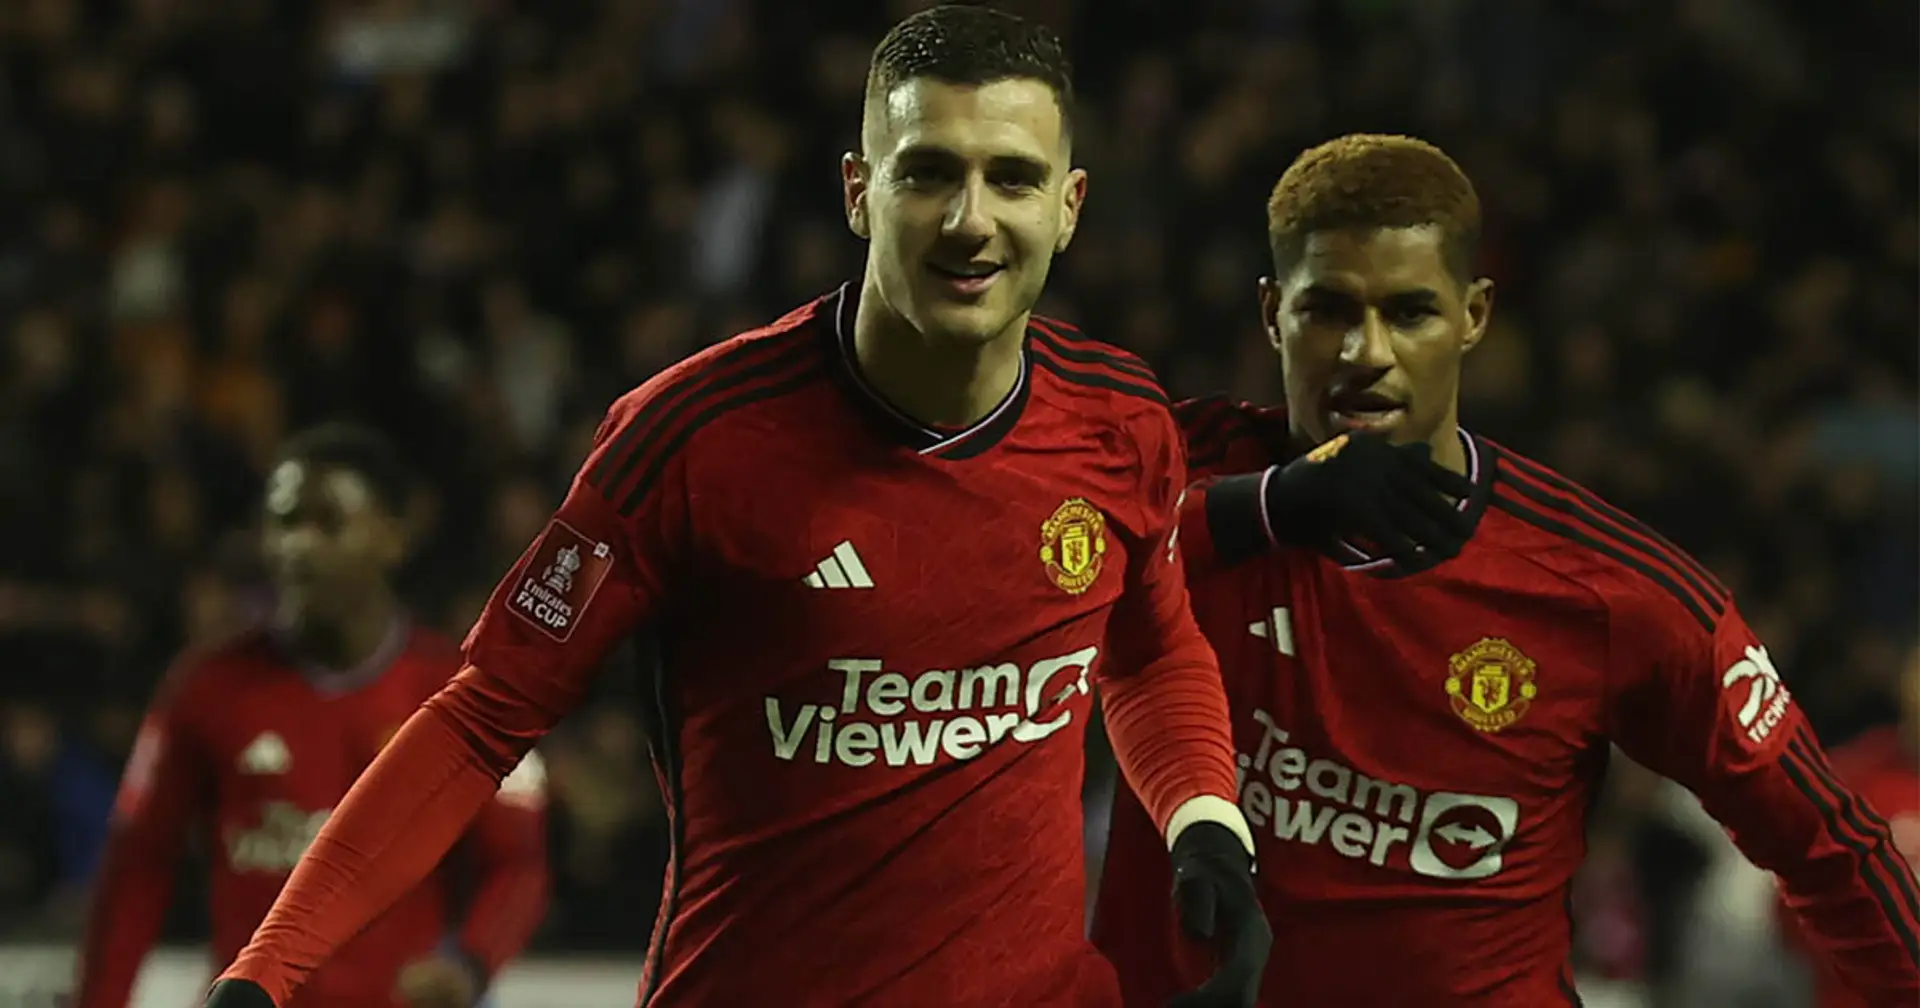 Dalot – 8, McTominay – 3: rating Man United players in Wigan win